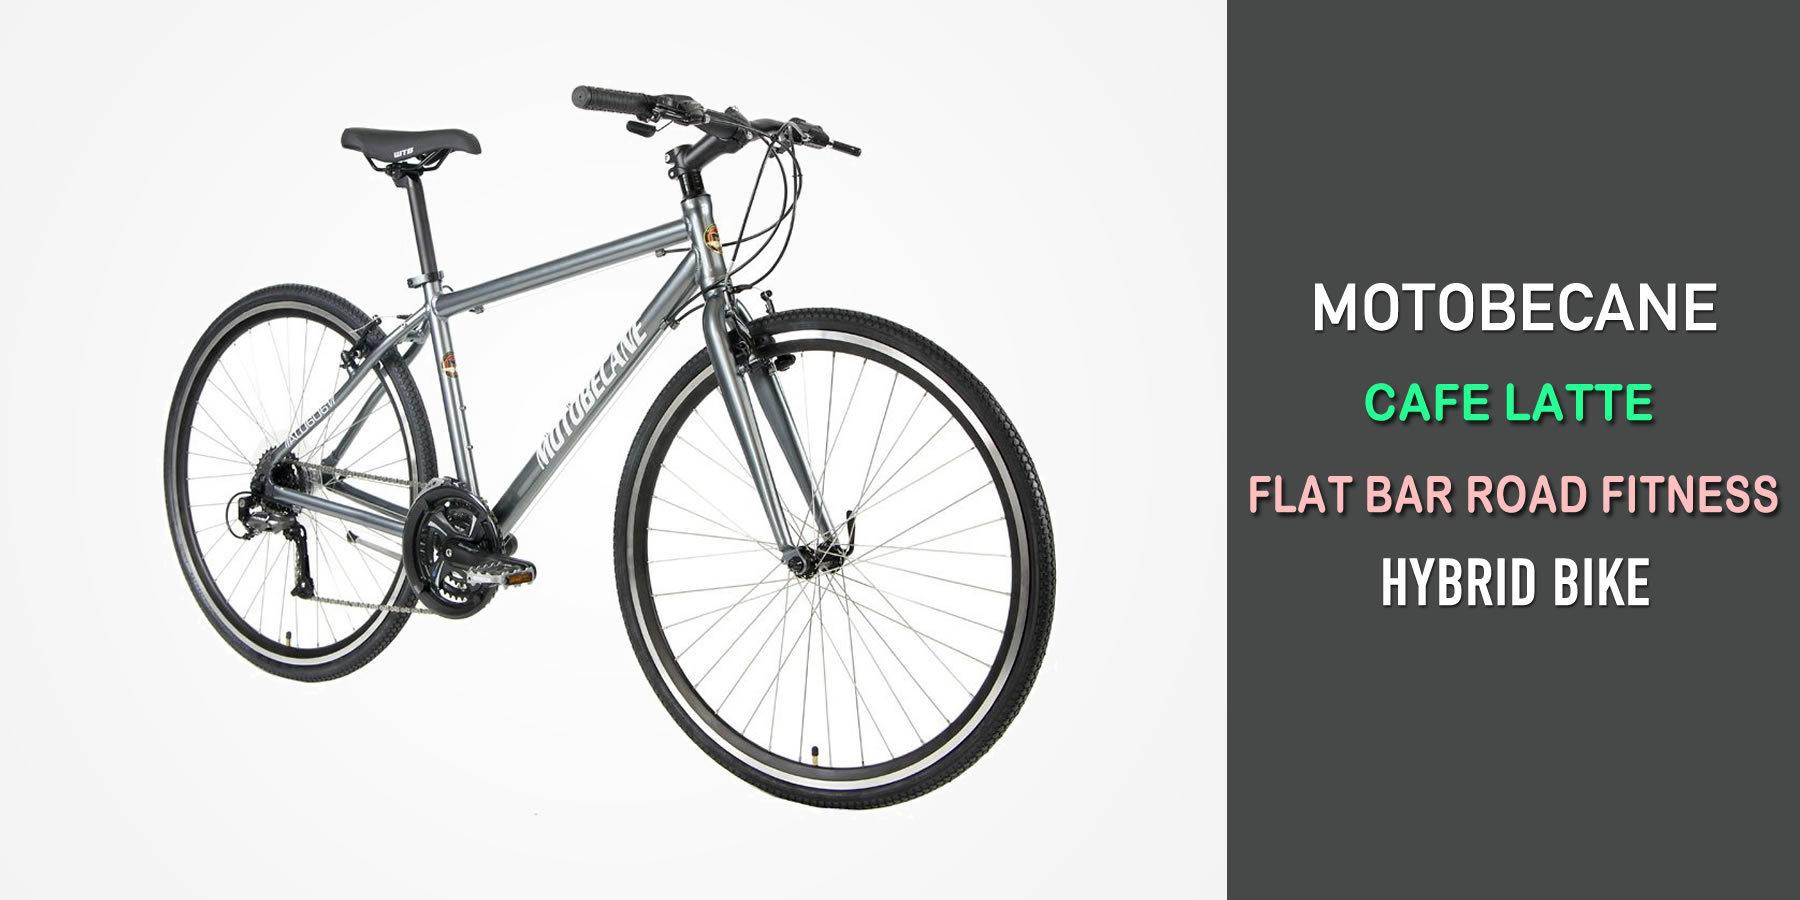 Motobecane Cafe Latte Flat Bar Road Fitness Hybrid Bike Review